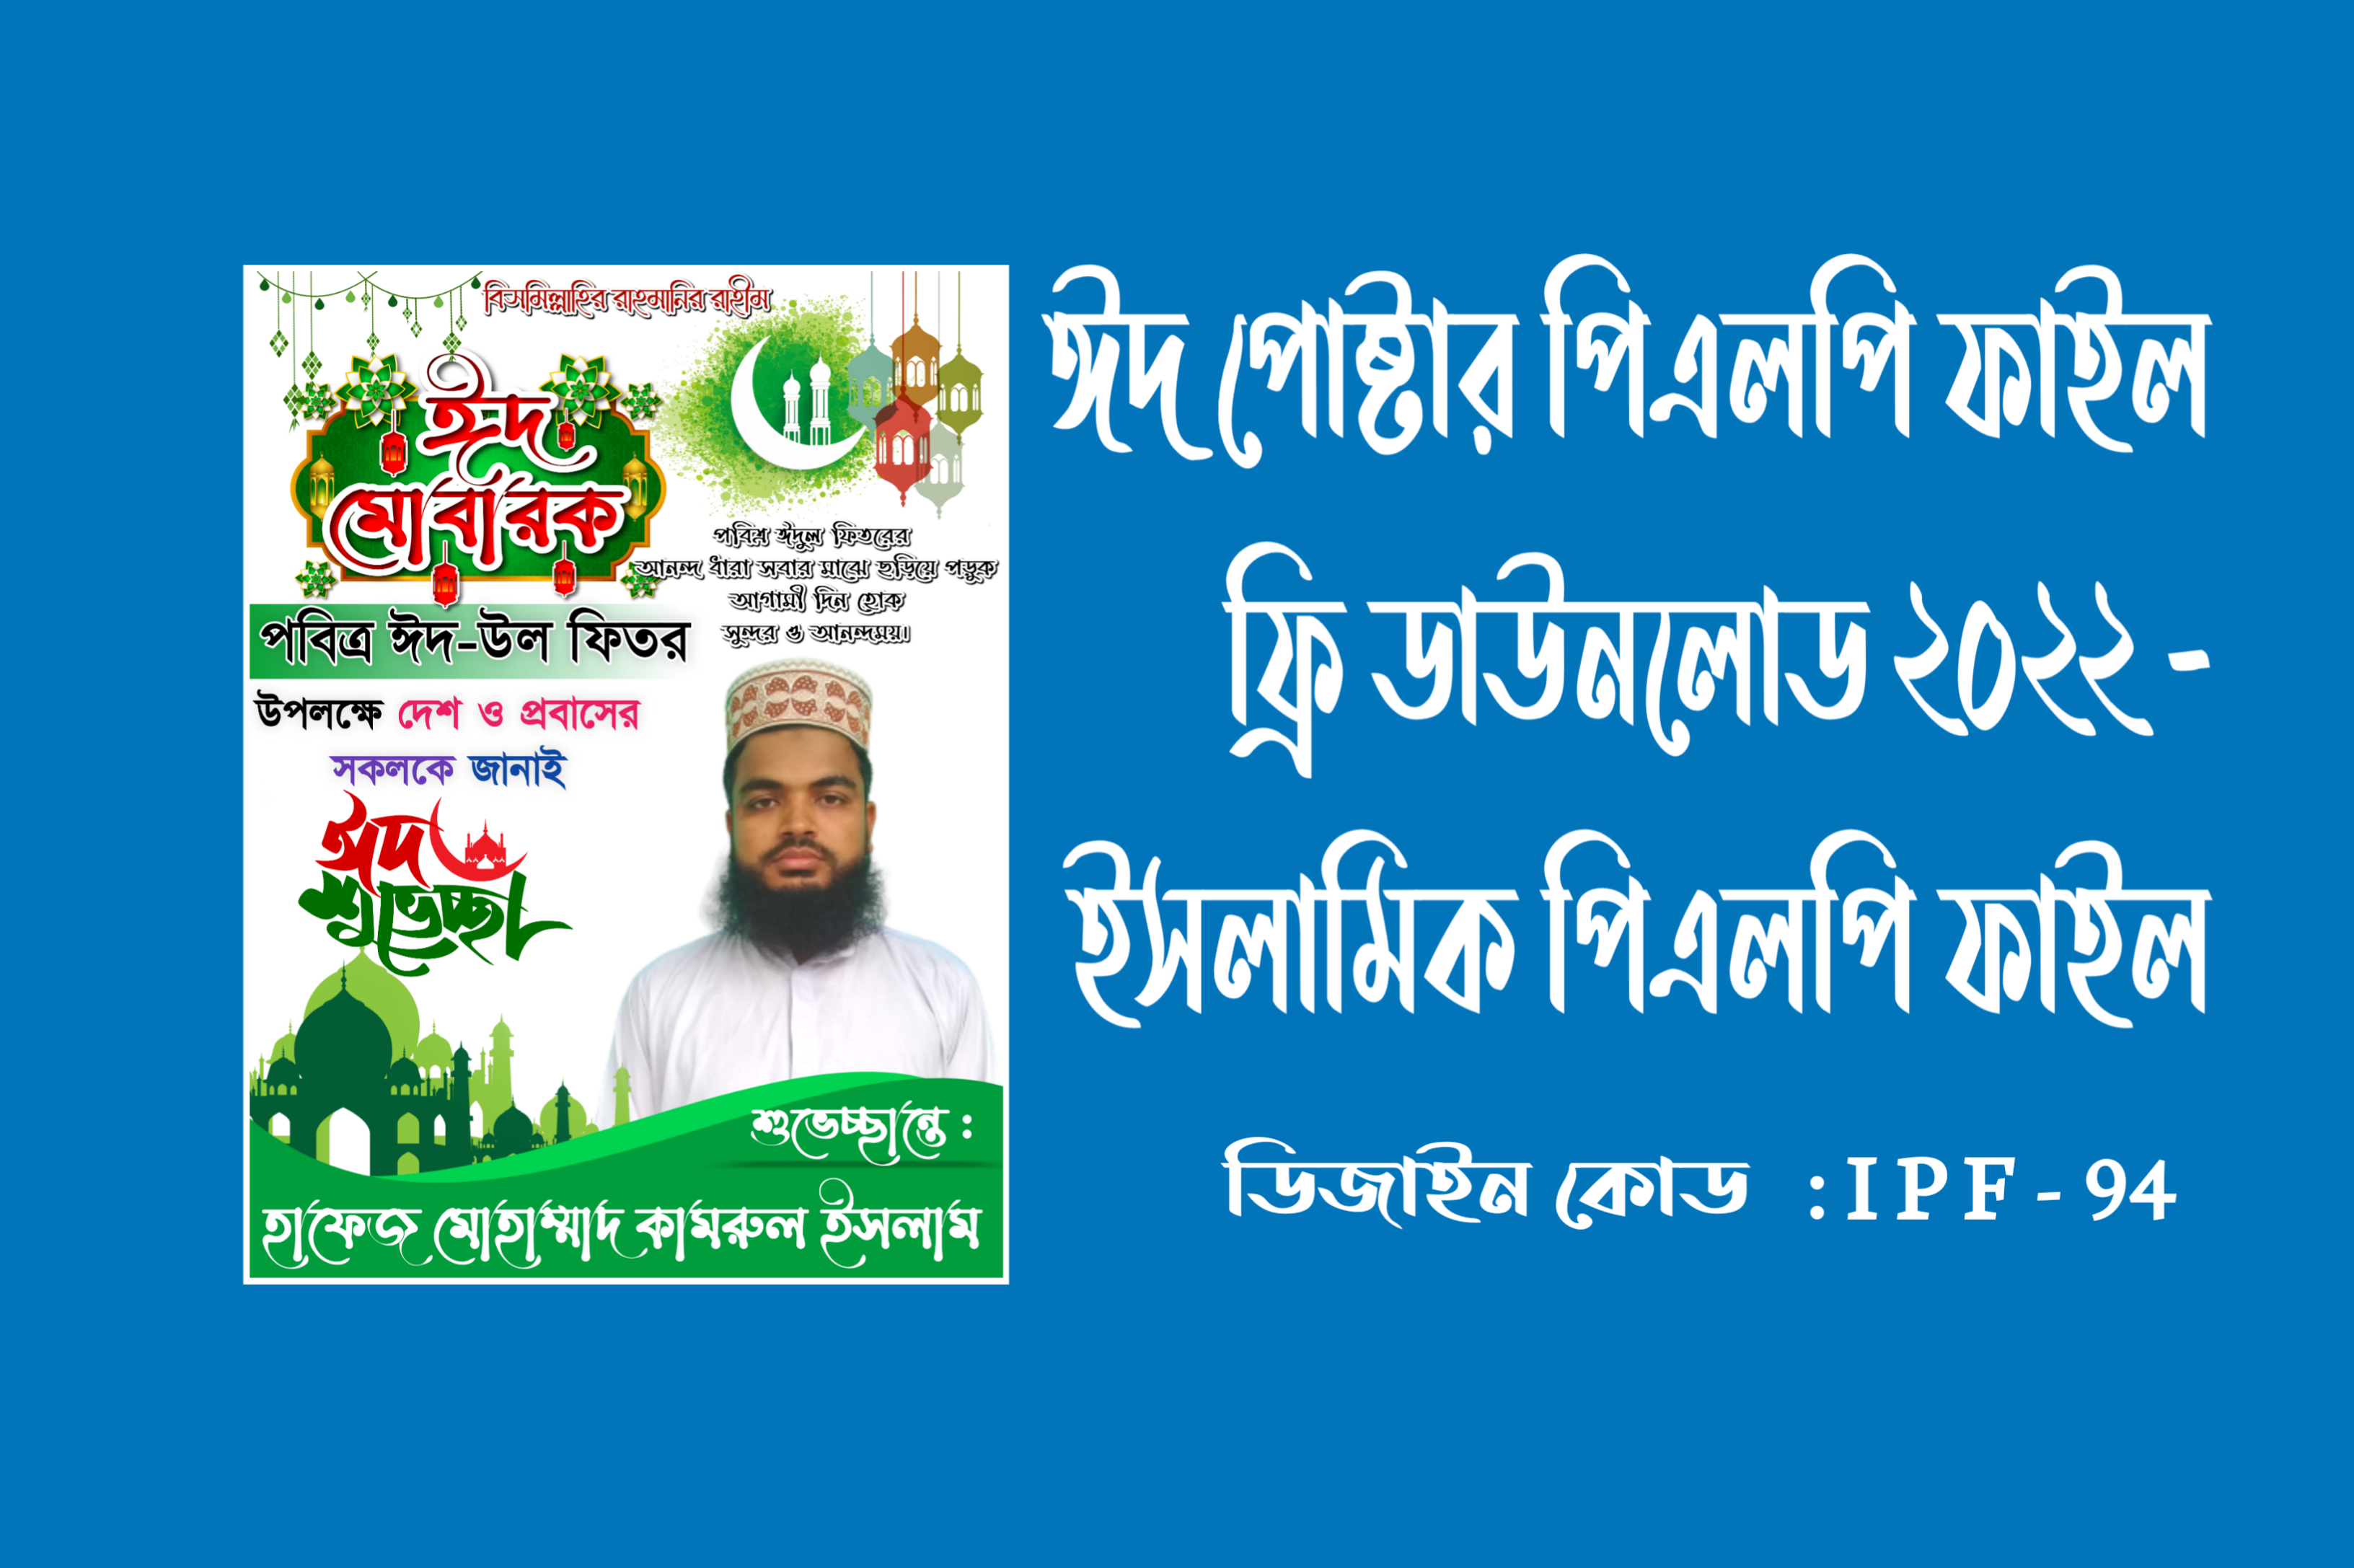 Eid-ul-Fitr Poster PLP File Free Download 2022 - Islamic Plp File